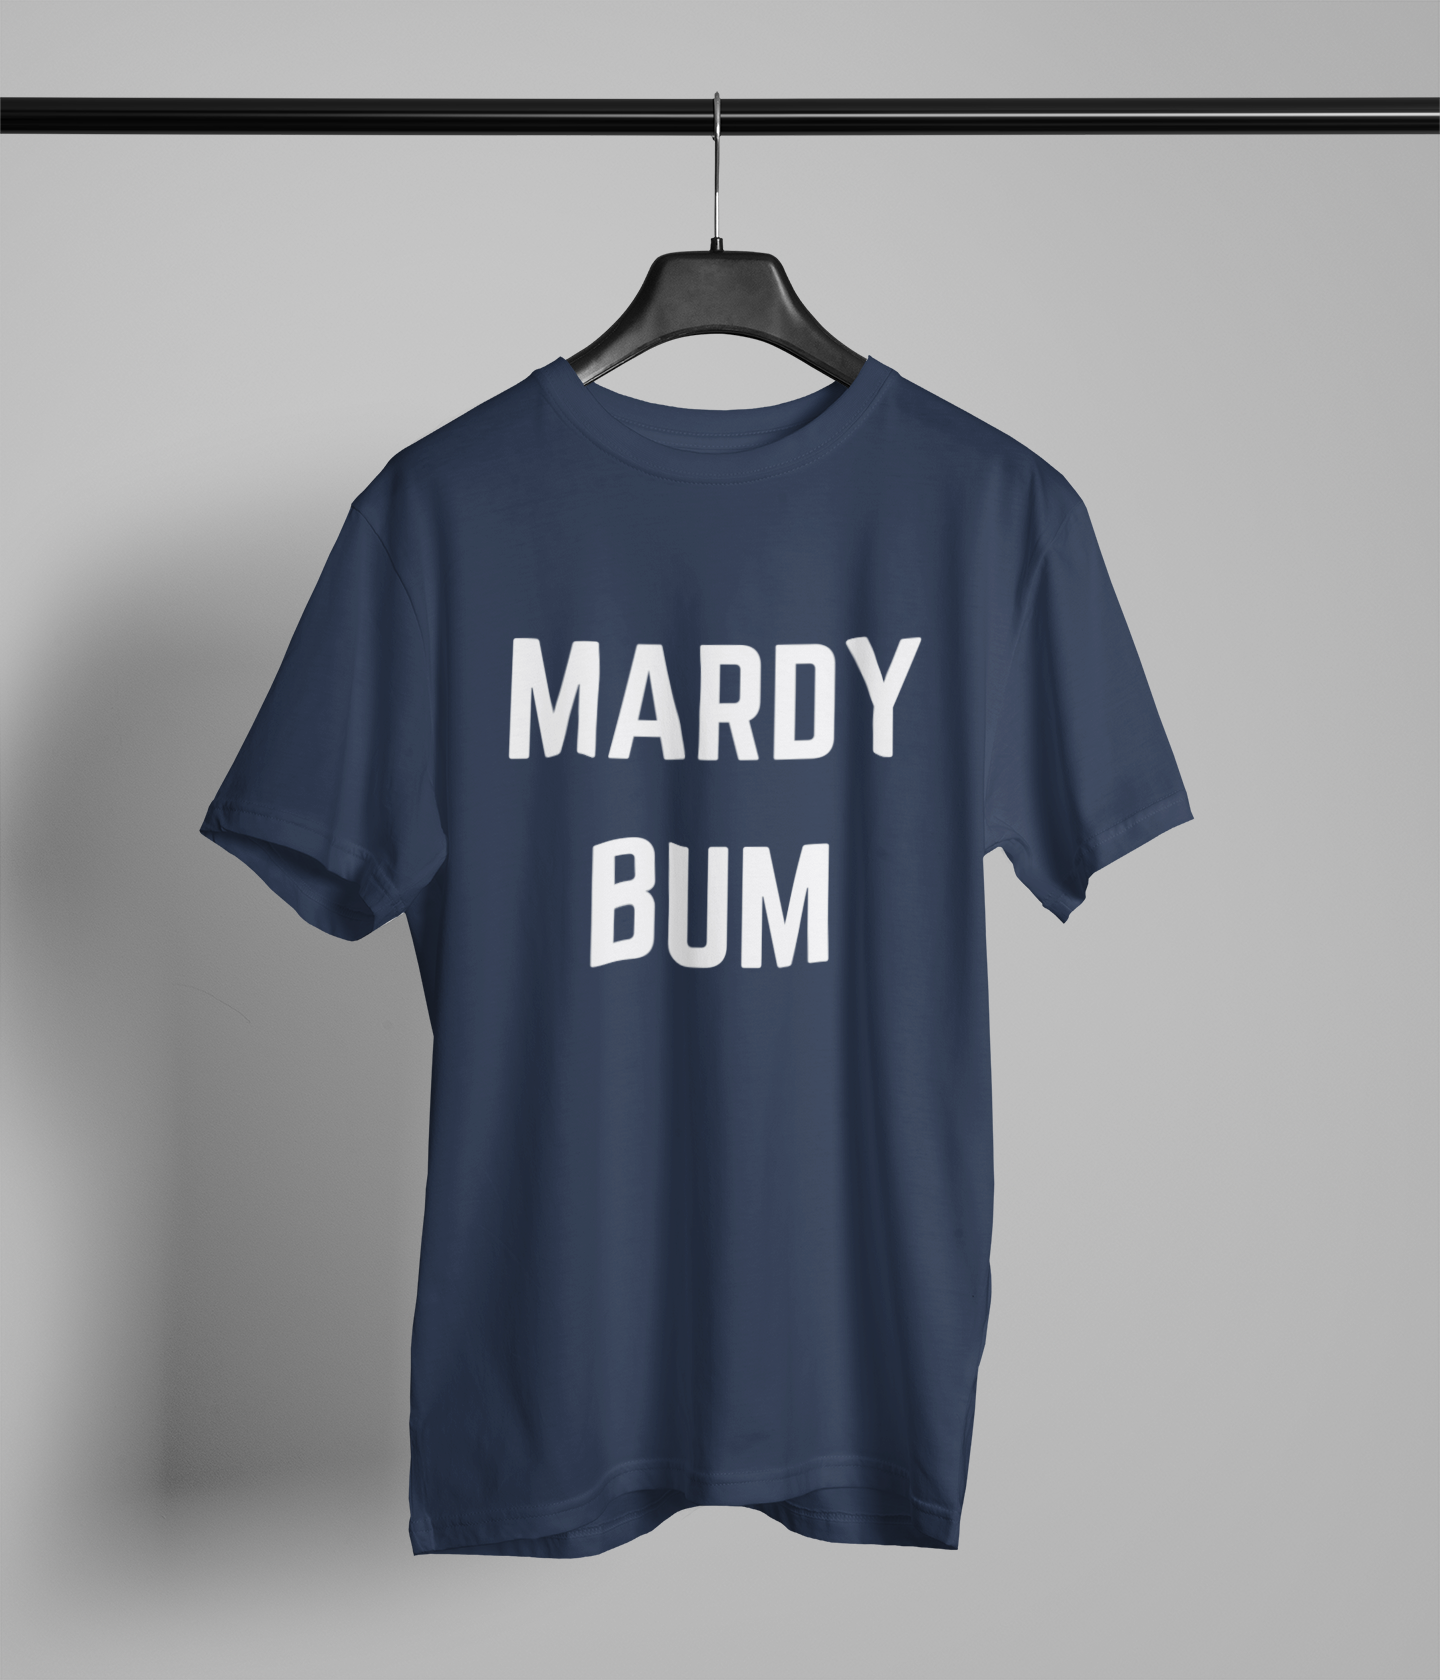 MARDY BUM Northern Slang T-Shirt Unisex